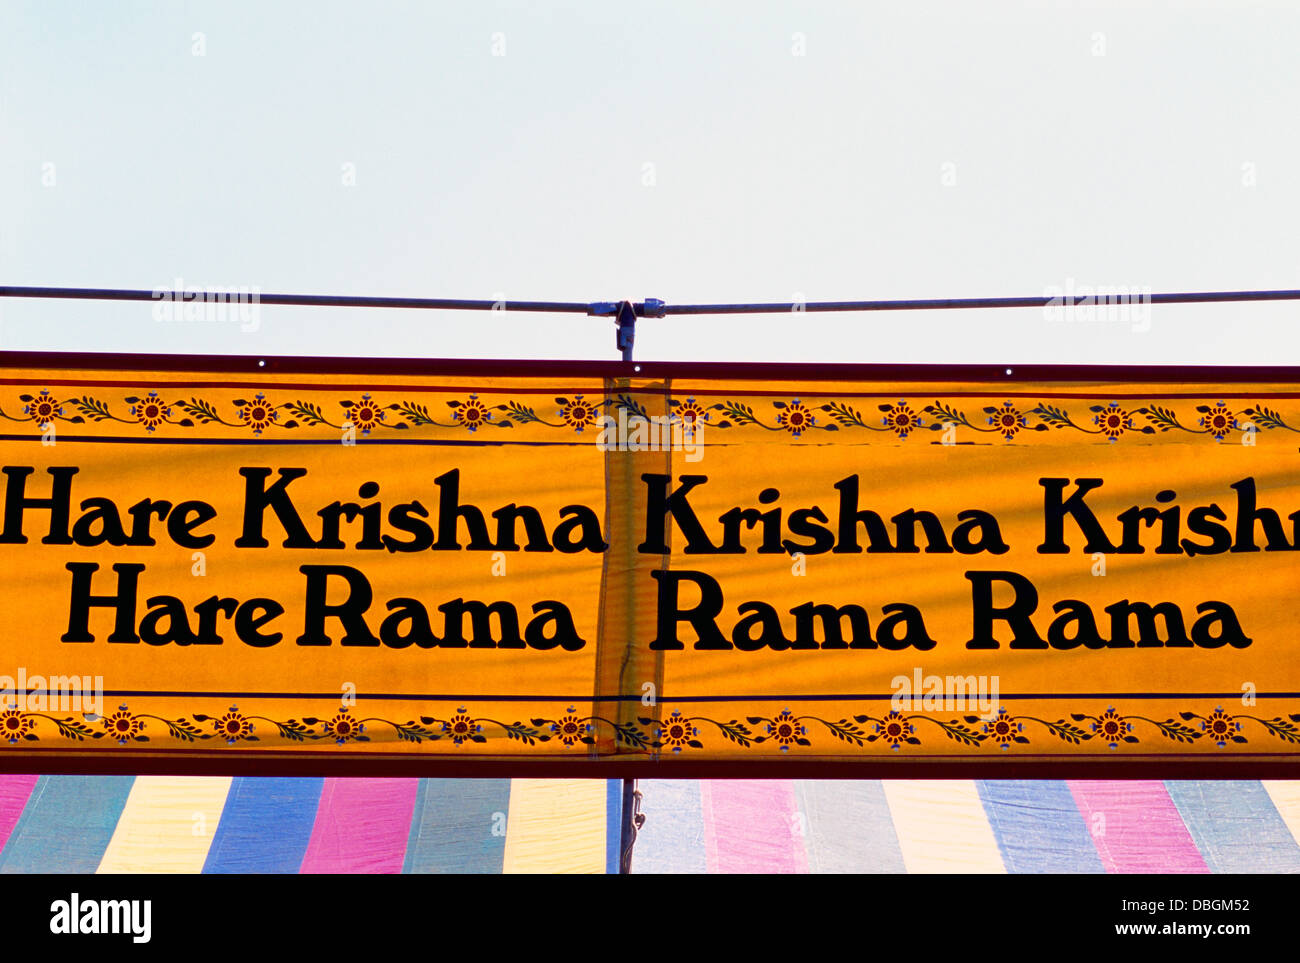 Hare krishna hare rama mantra fotografías e imágenes de alta resolución -  Alamy